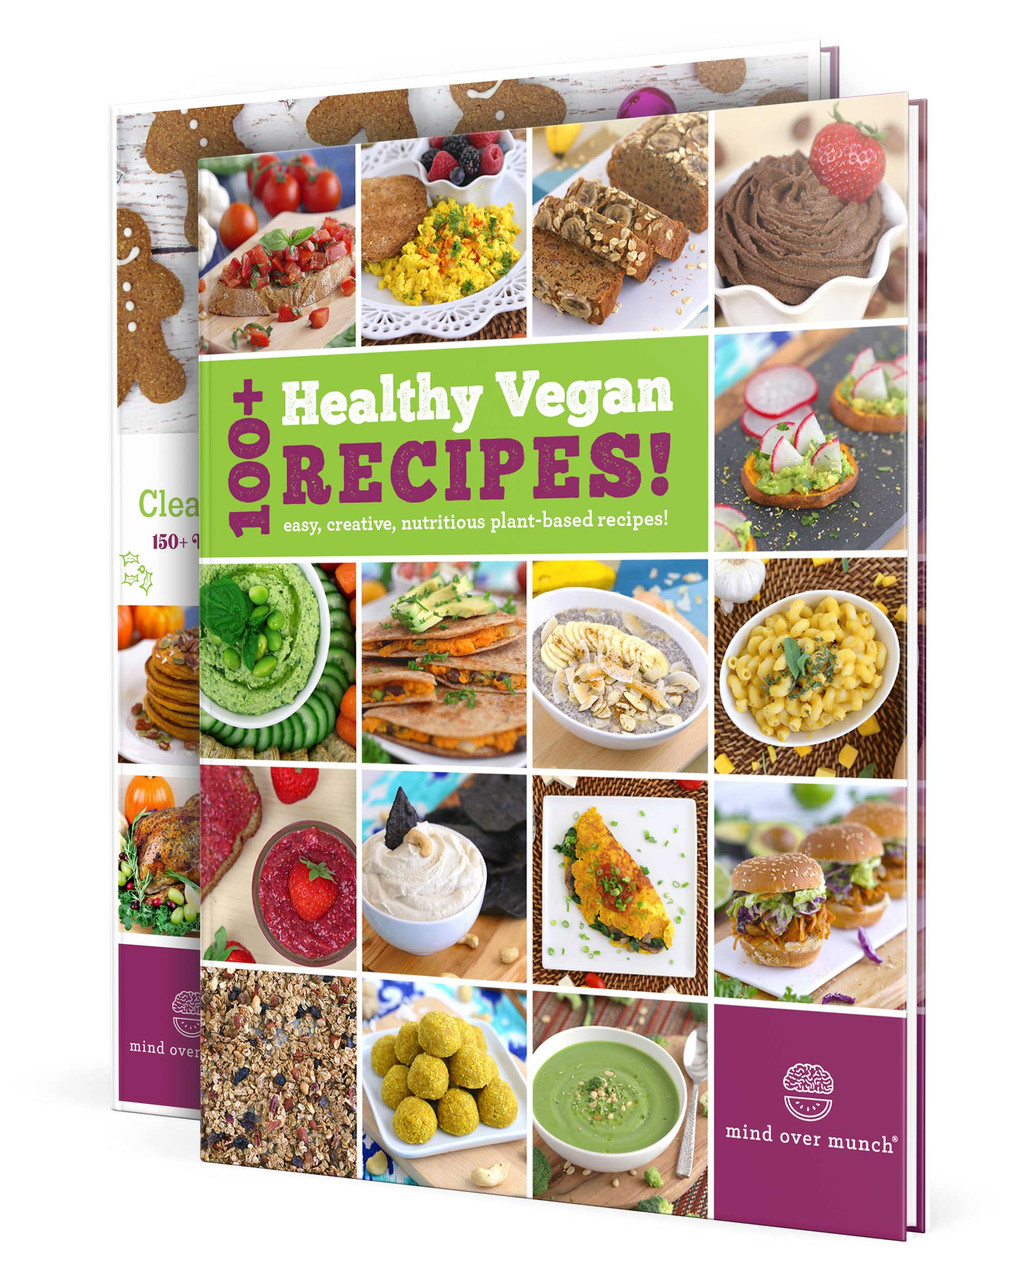 100+ Best Vegan Recipes - Easy Plant-Based Recipes